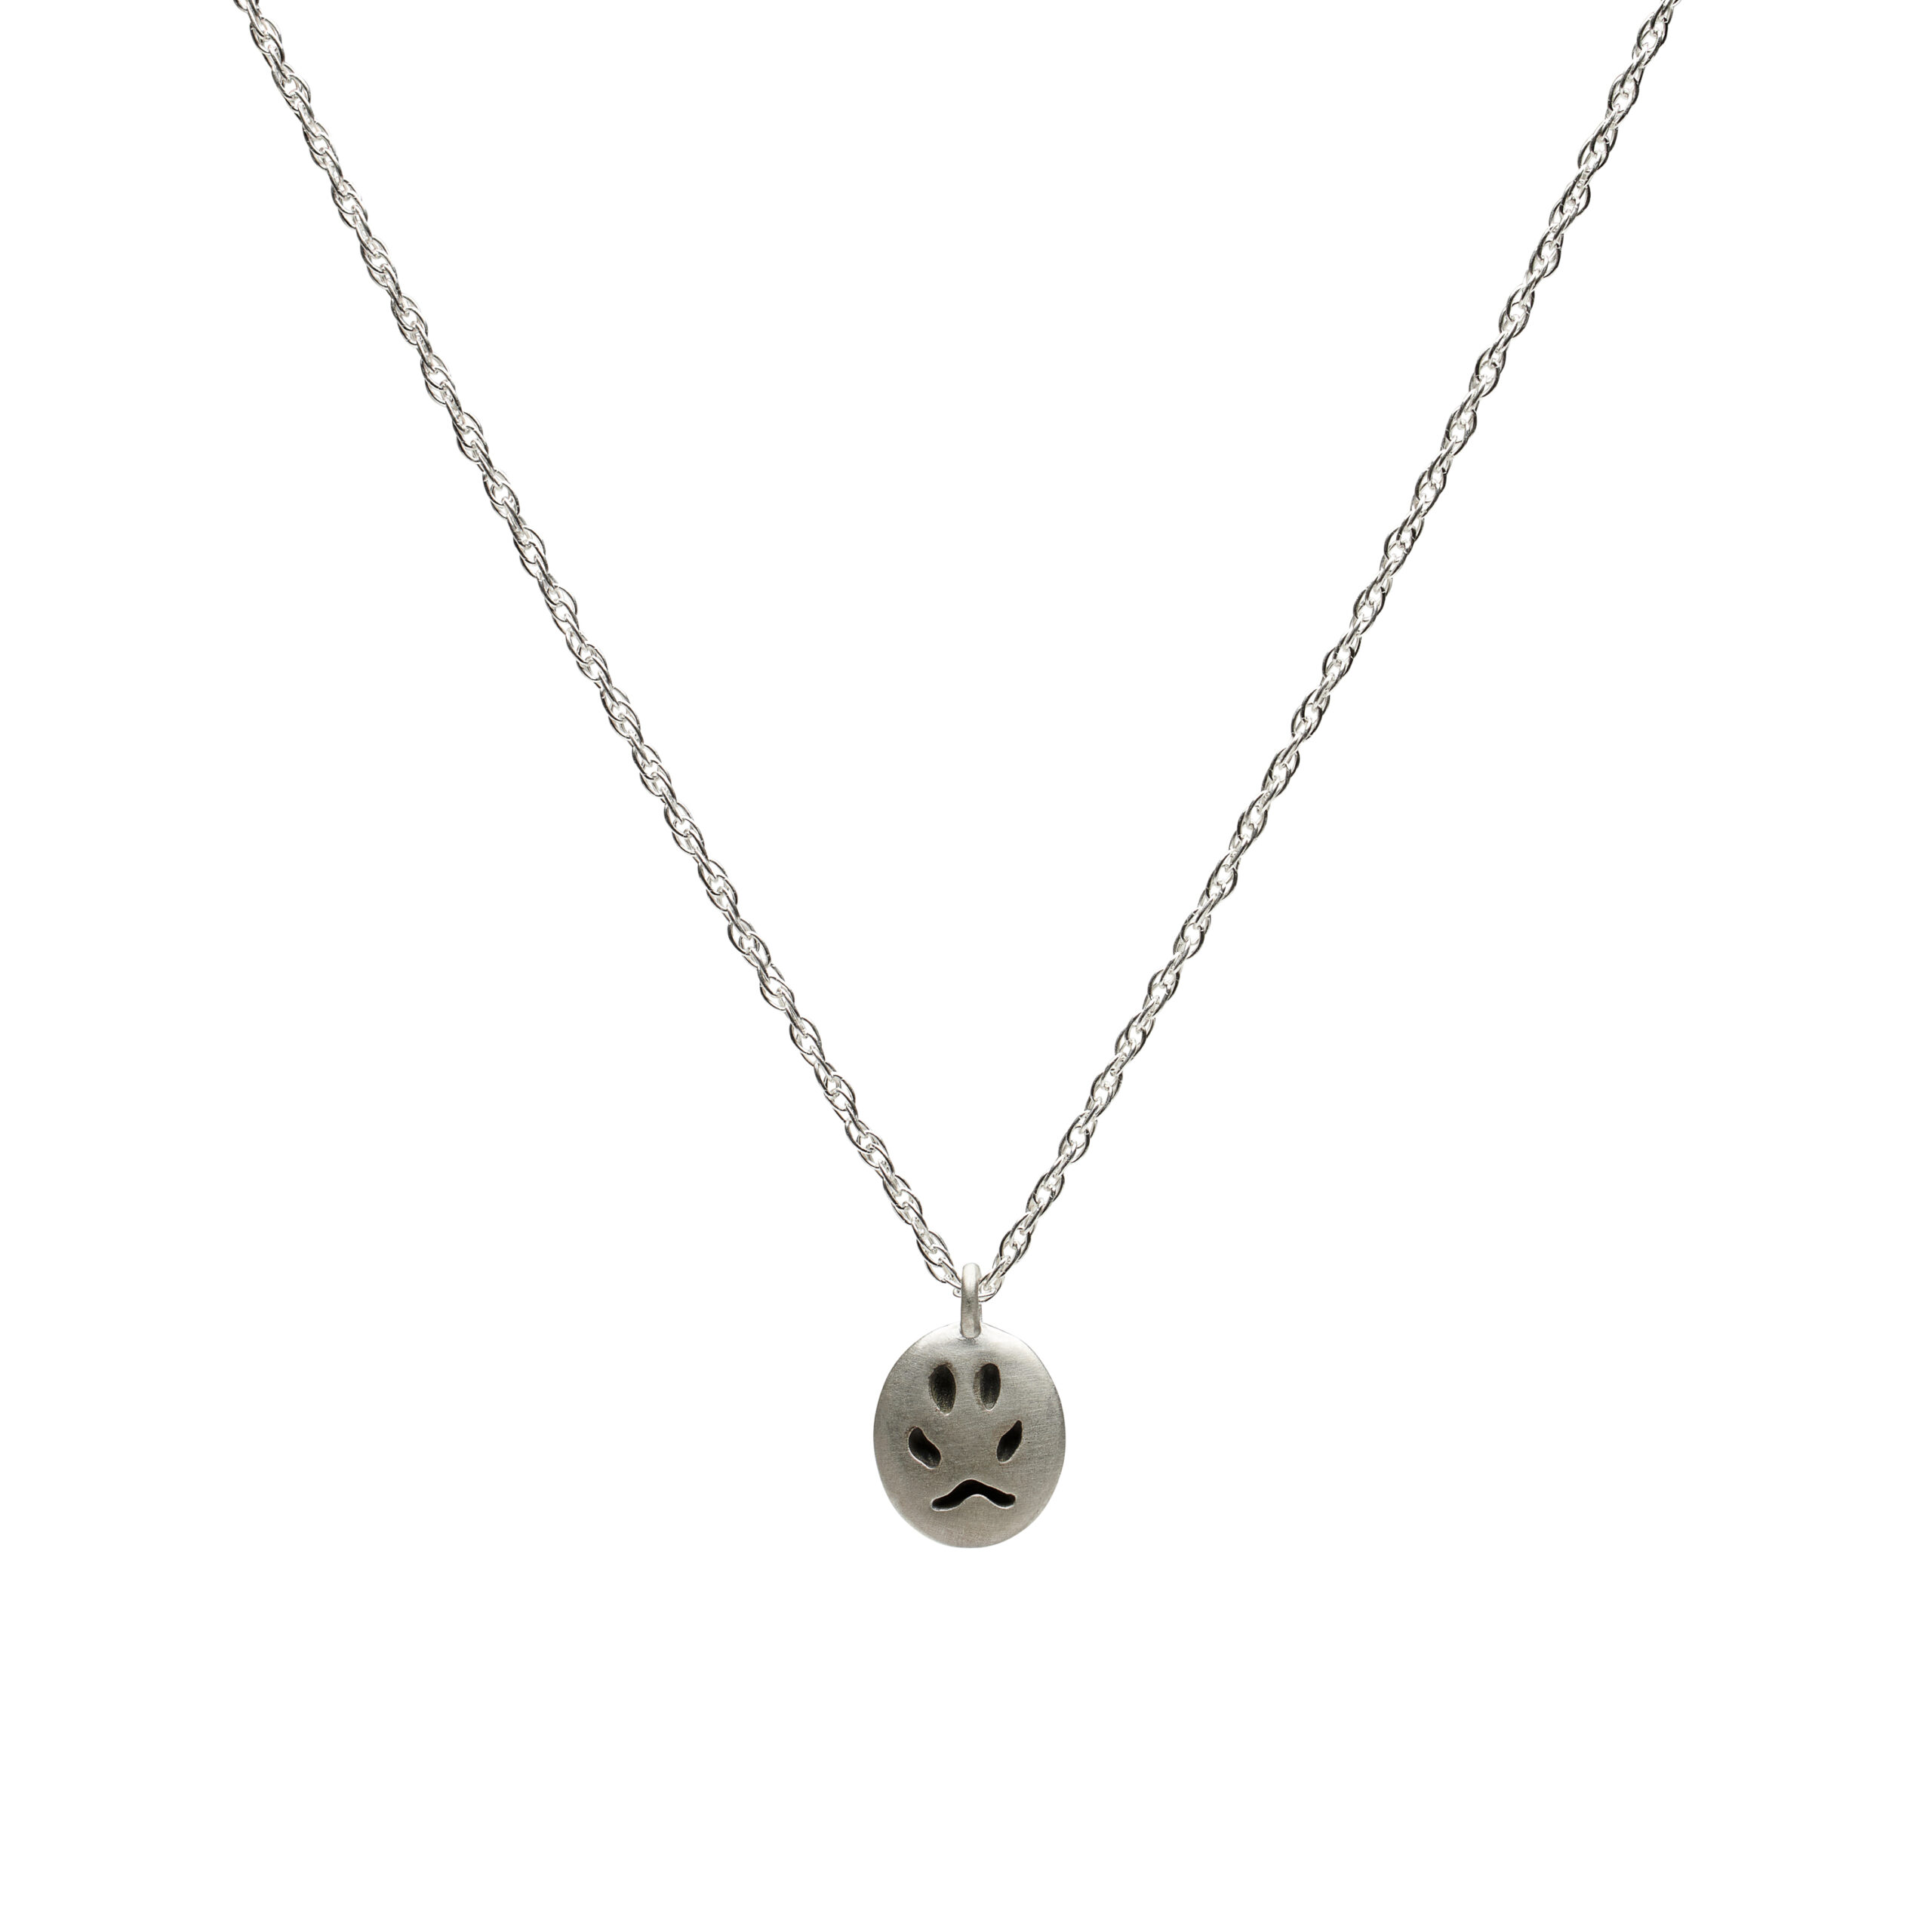 Silver pendant depicting a fox paw print